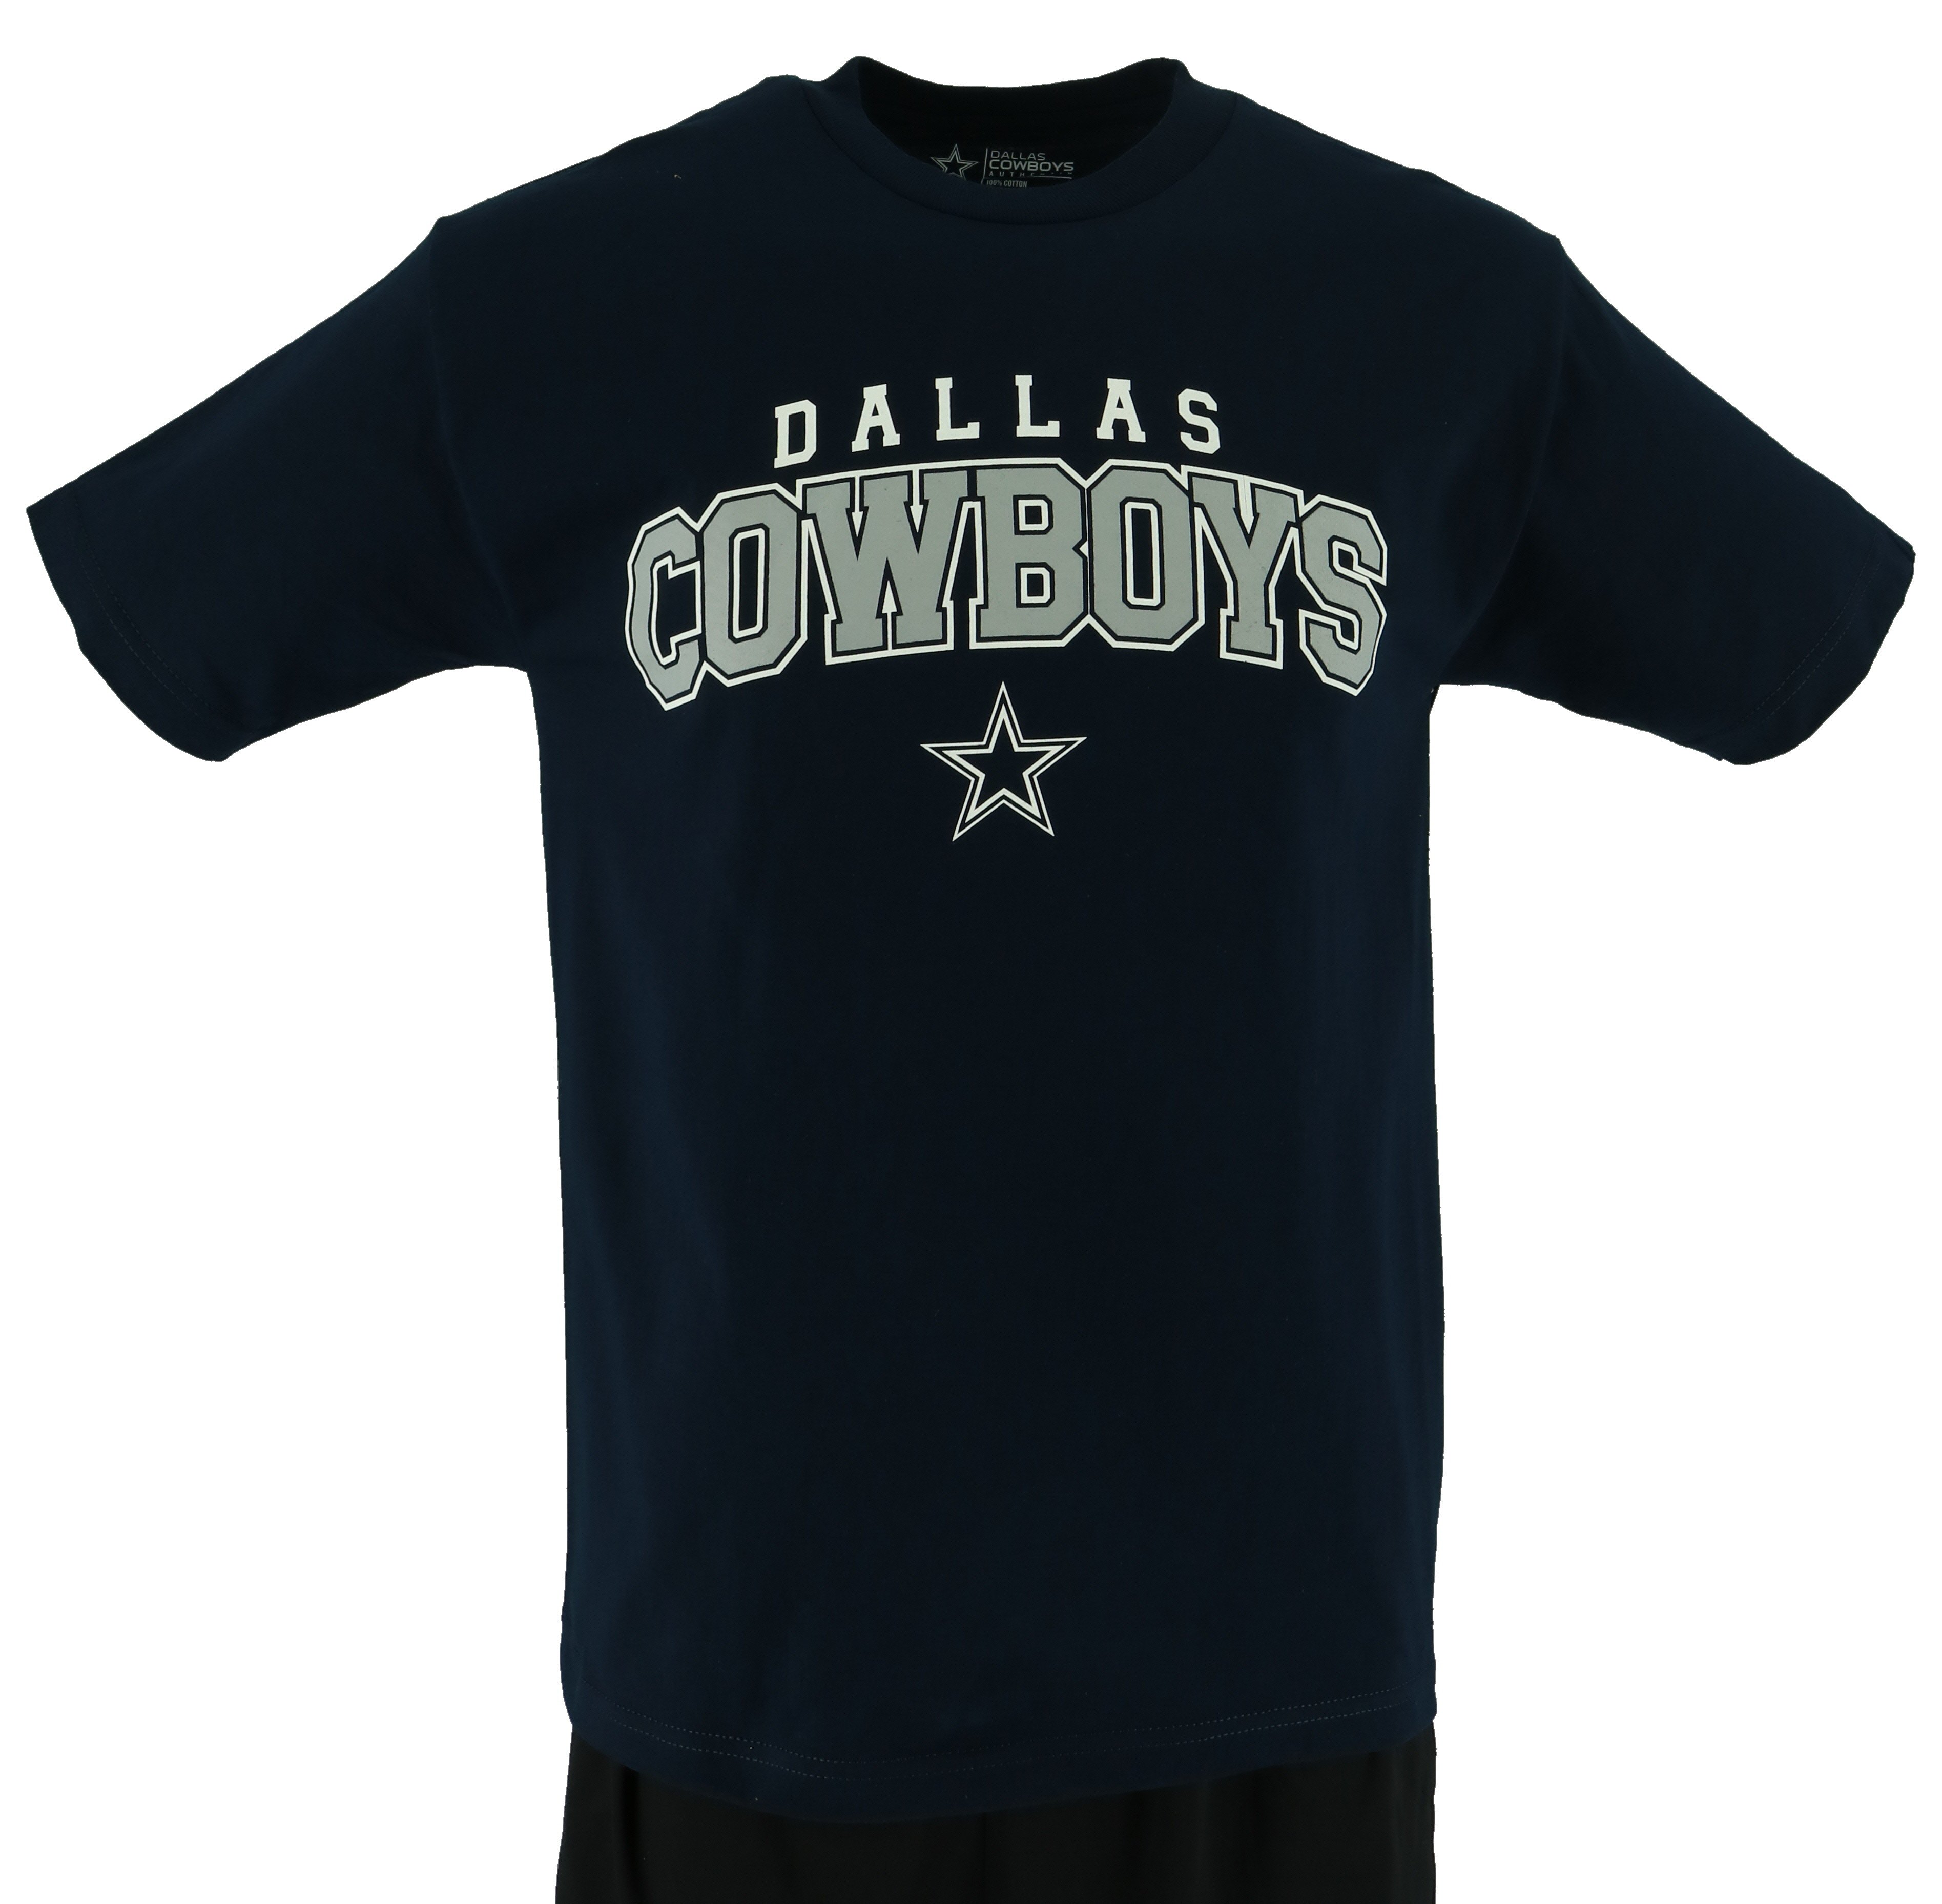 Dallas Cowboys Men's Navy Blue Vaulted T-Shirt - Shop Team Apparel at H-E-B